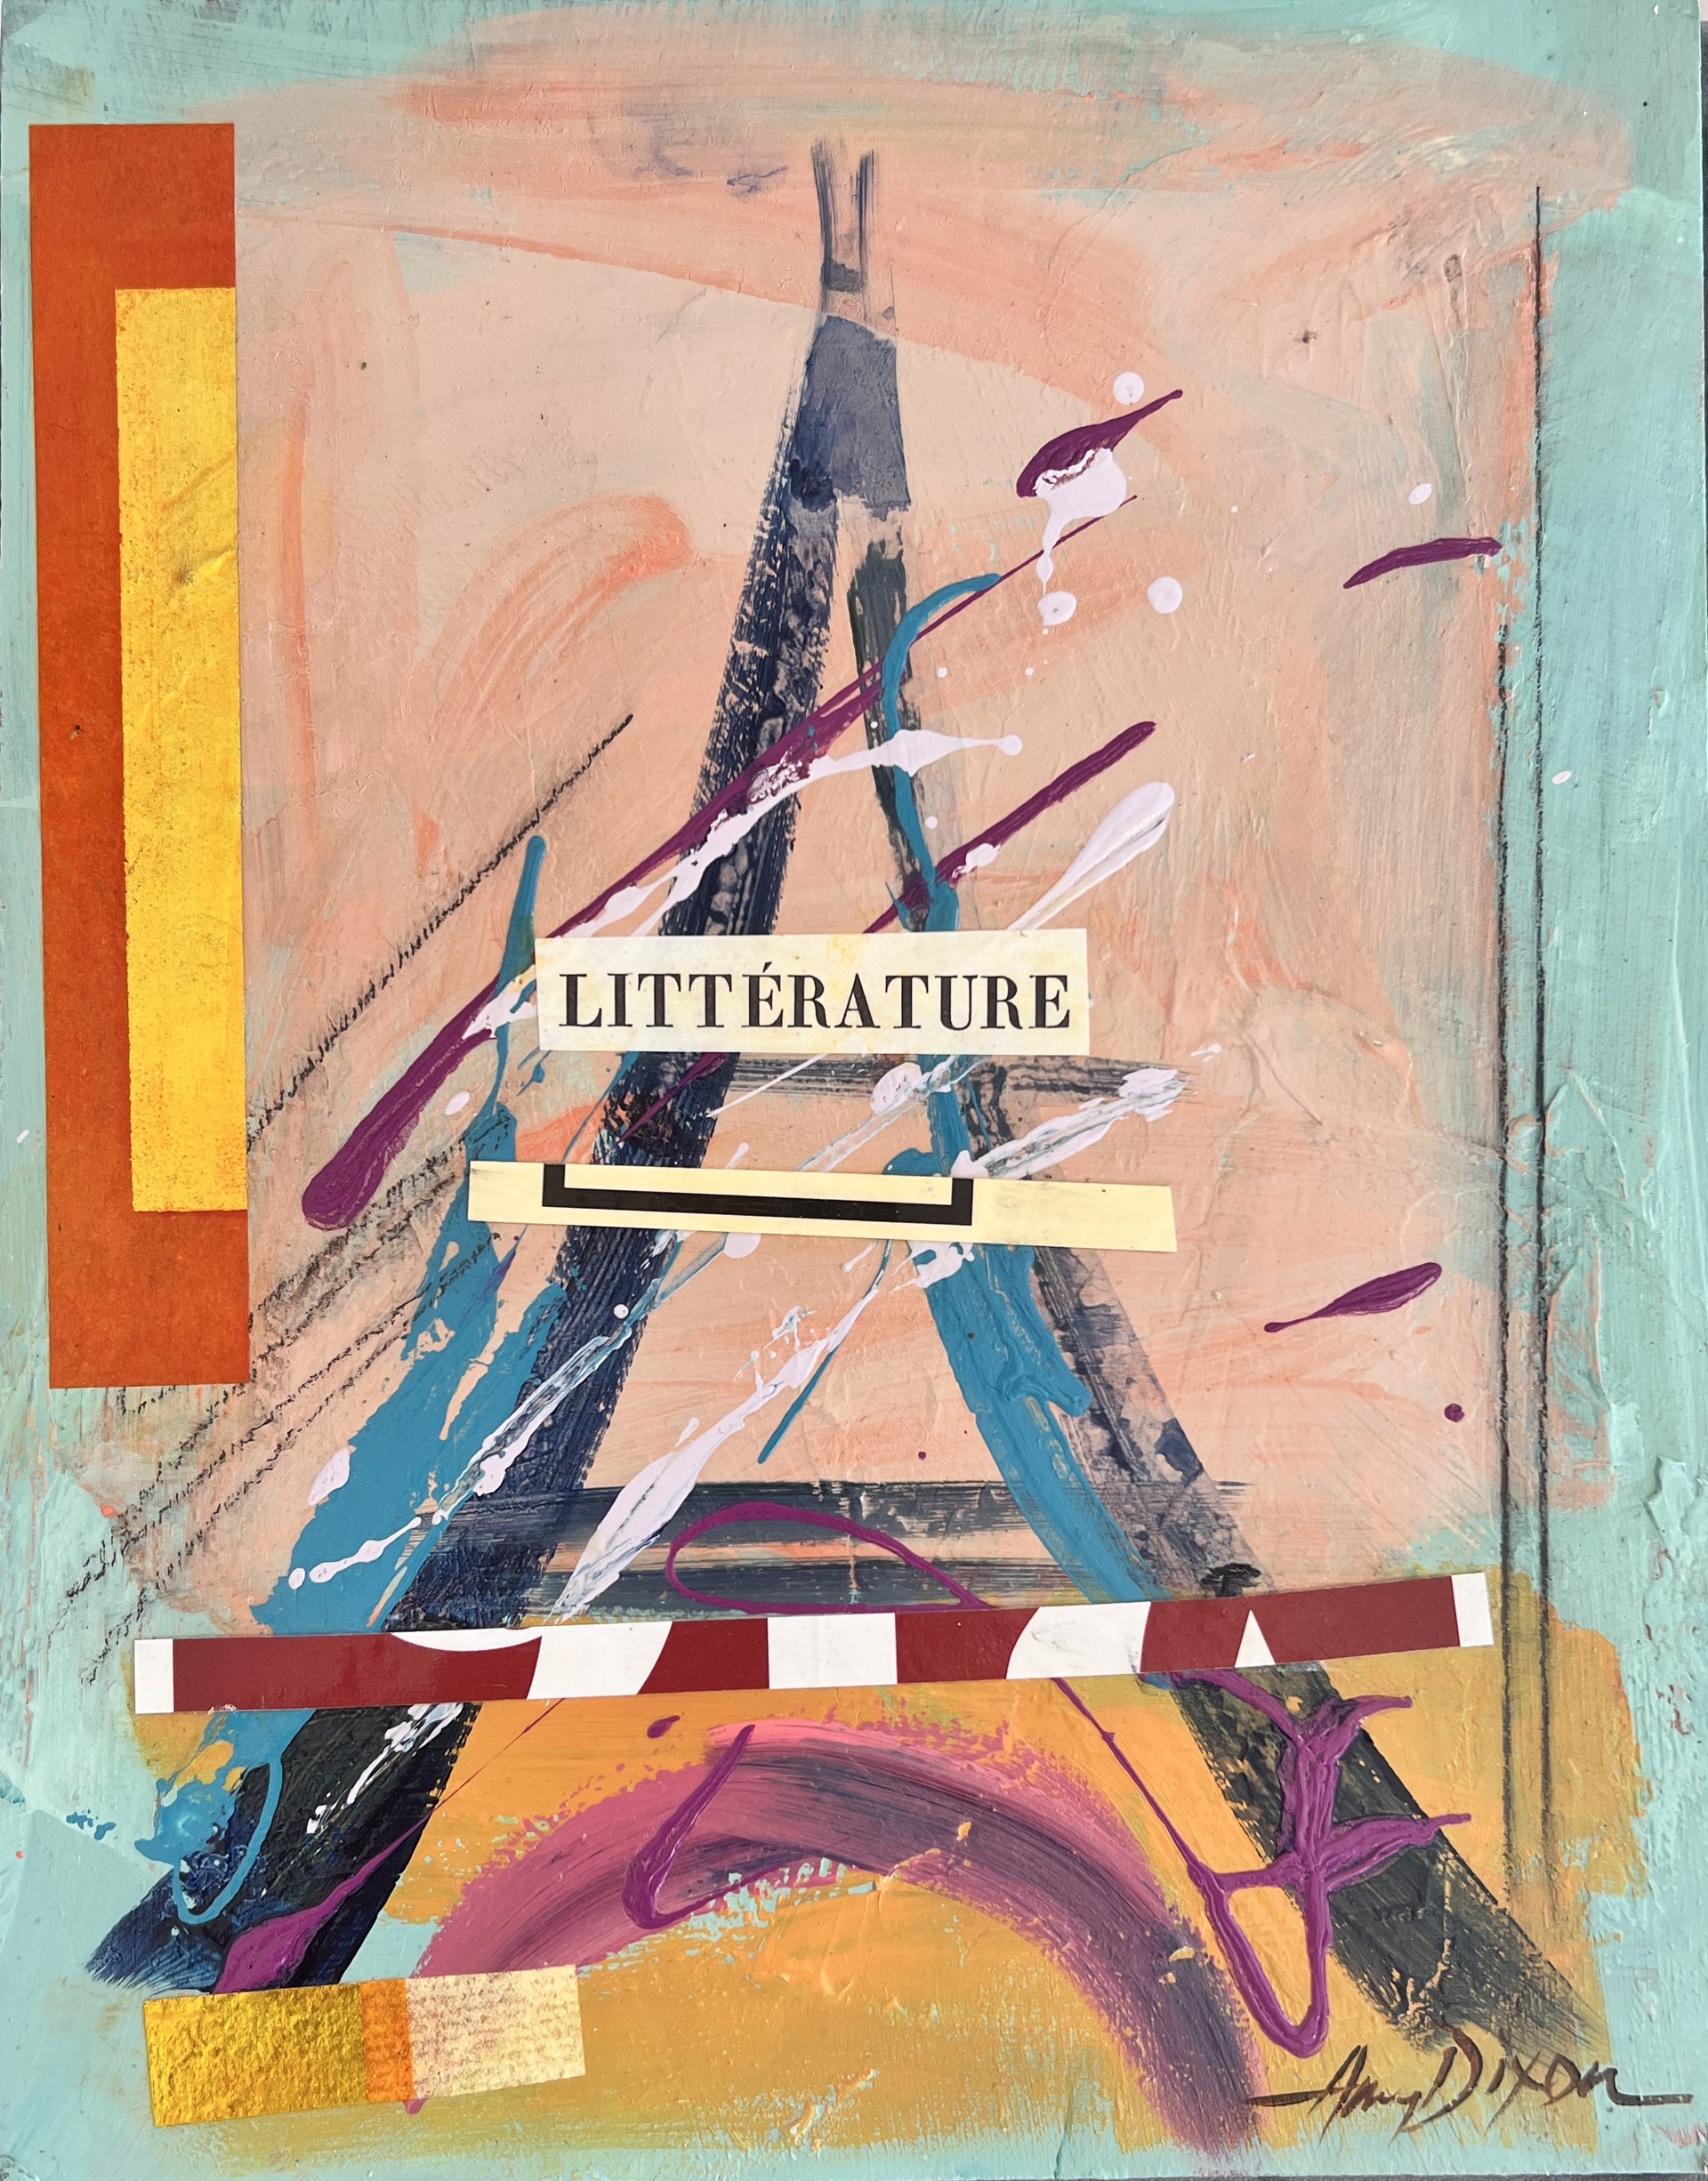 Eiffel, Literature (Pink) by Amy Dixon